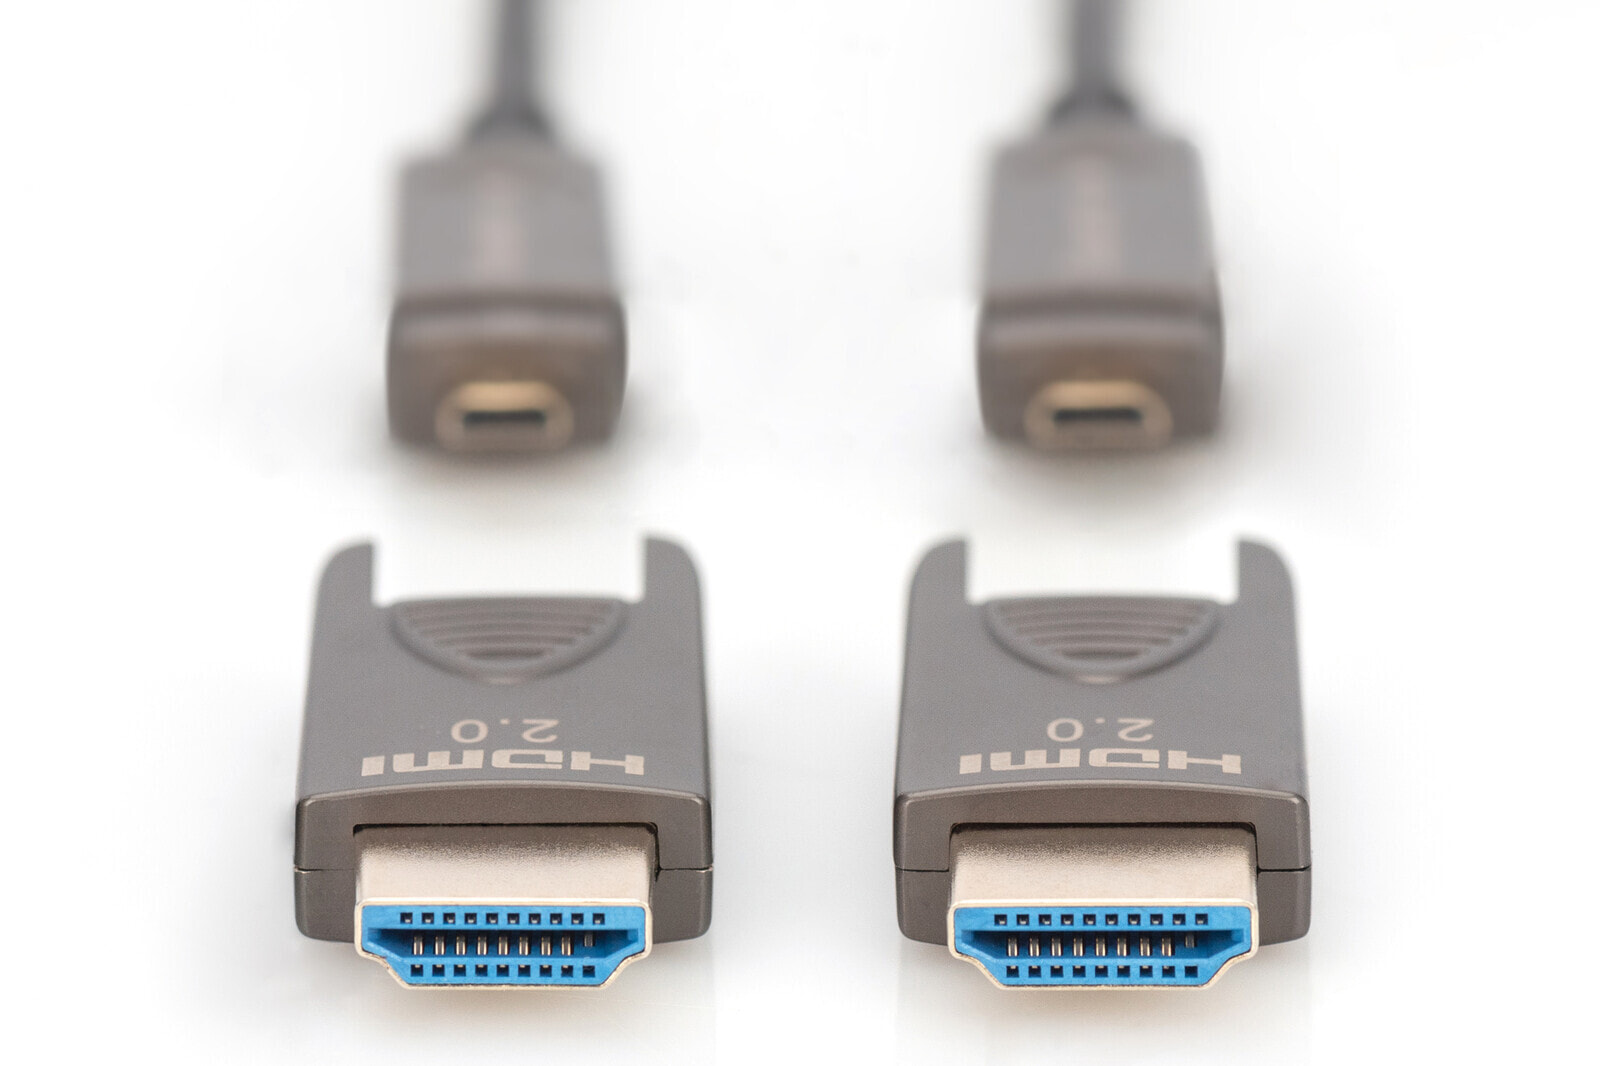 4K - HDMI® AOC Hybrid Fiber Optic Cable with 30m removable plug